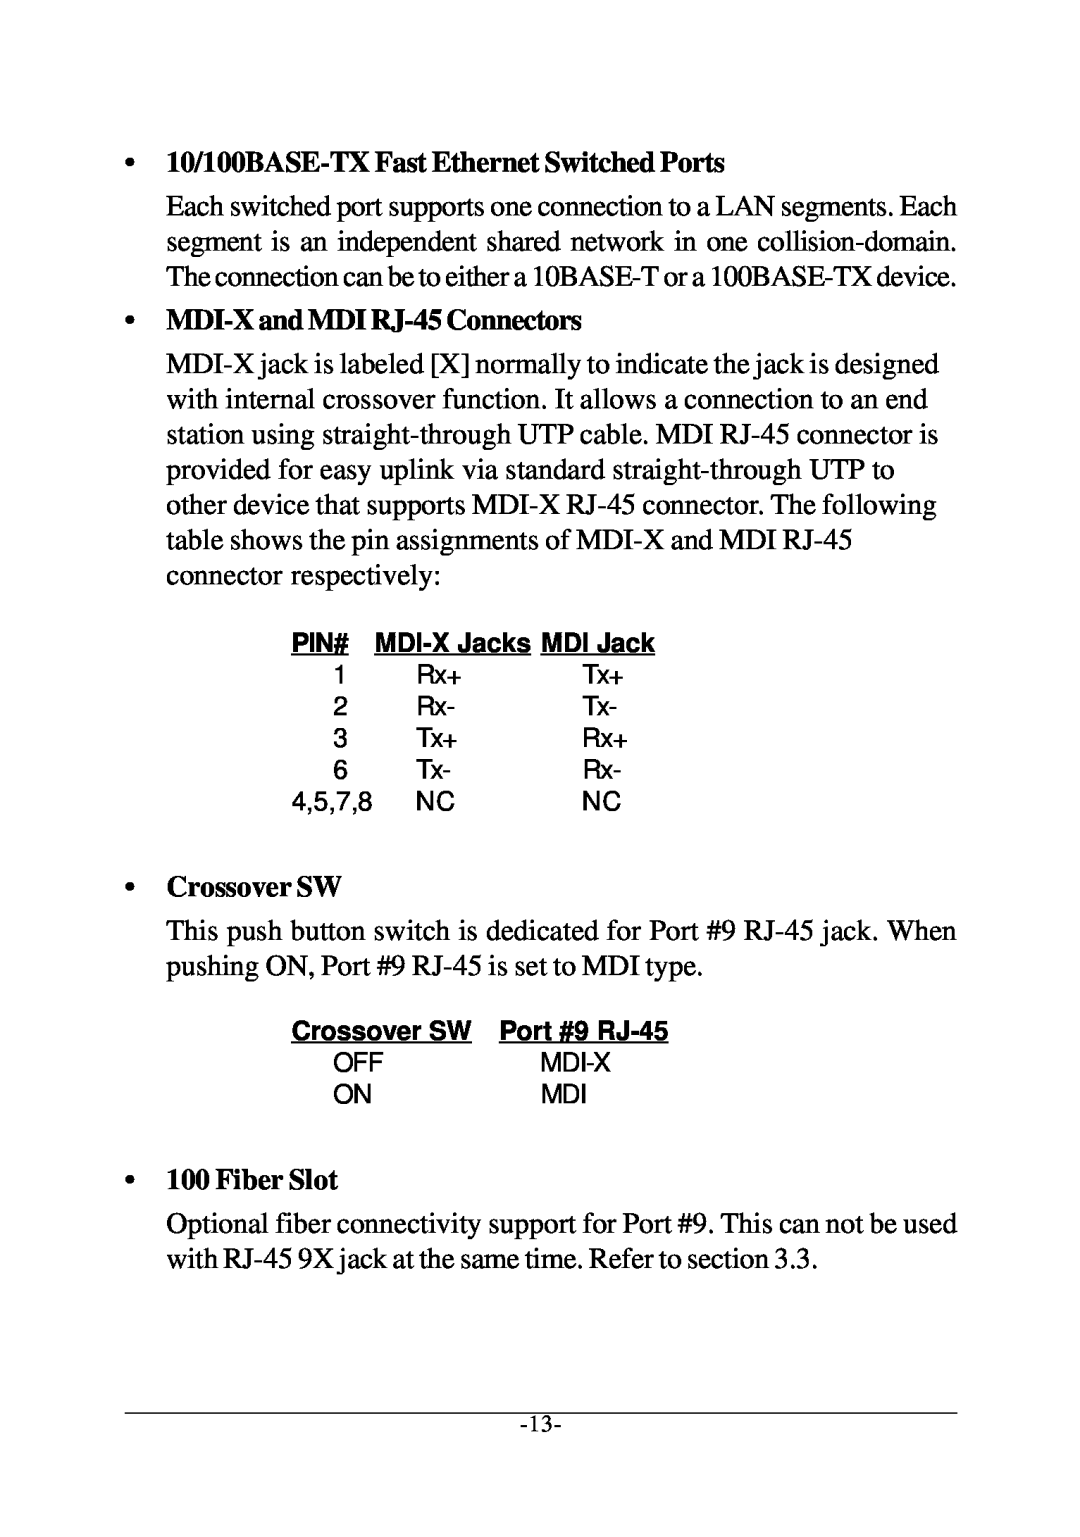 Xerox KS-801 operation manual Pin#, MDI-X Jacks MDI Jack, Crossover SW, Port #9 RJ-45 